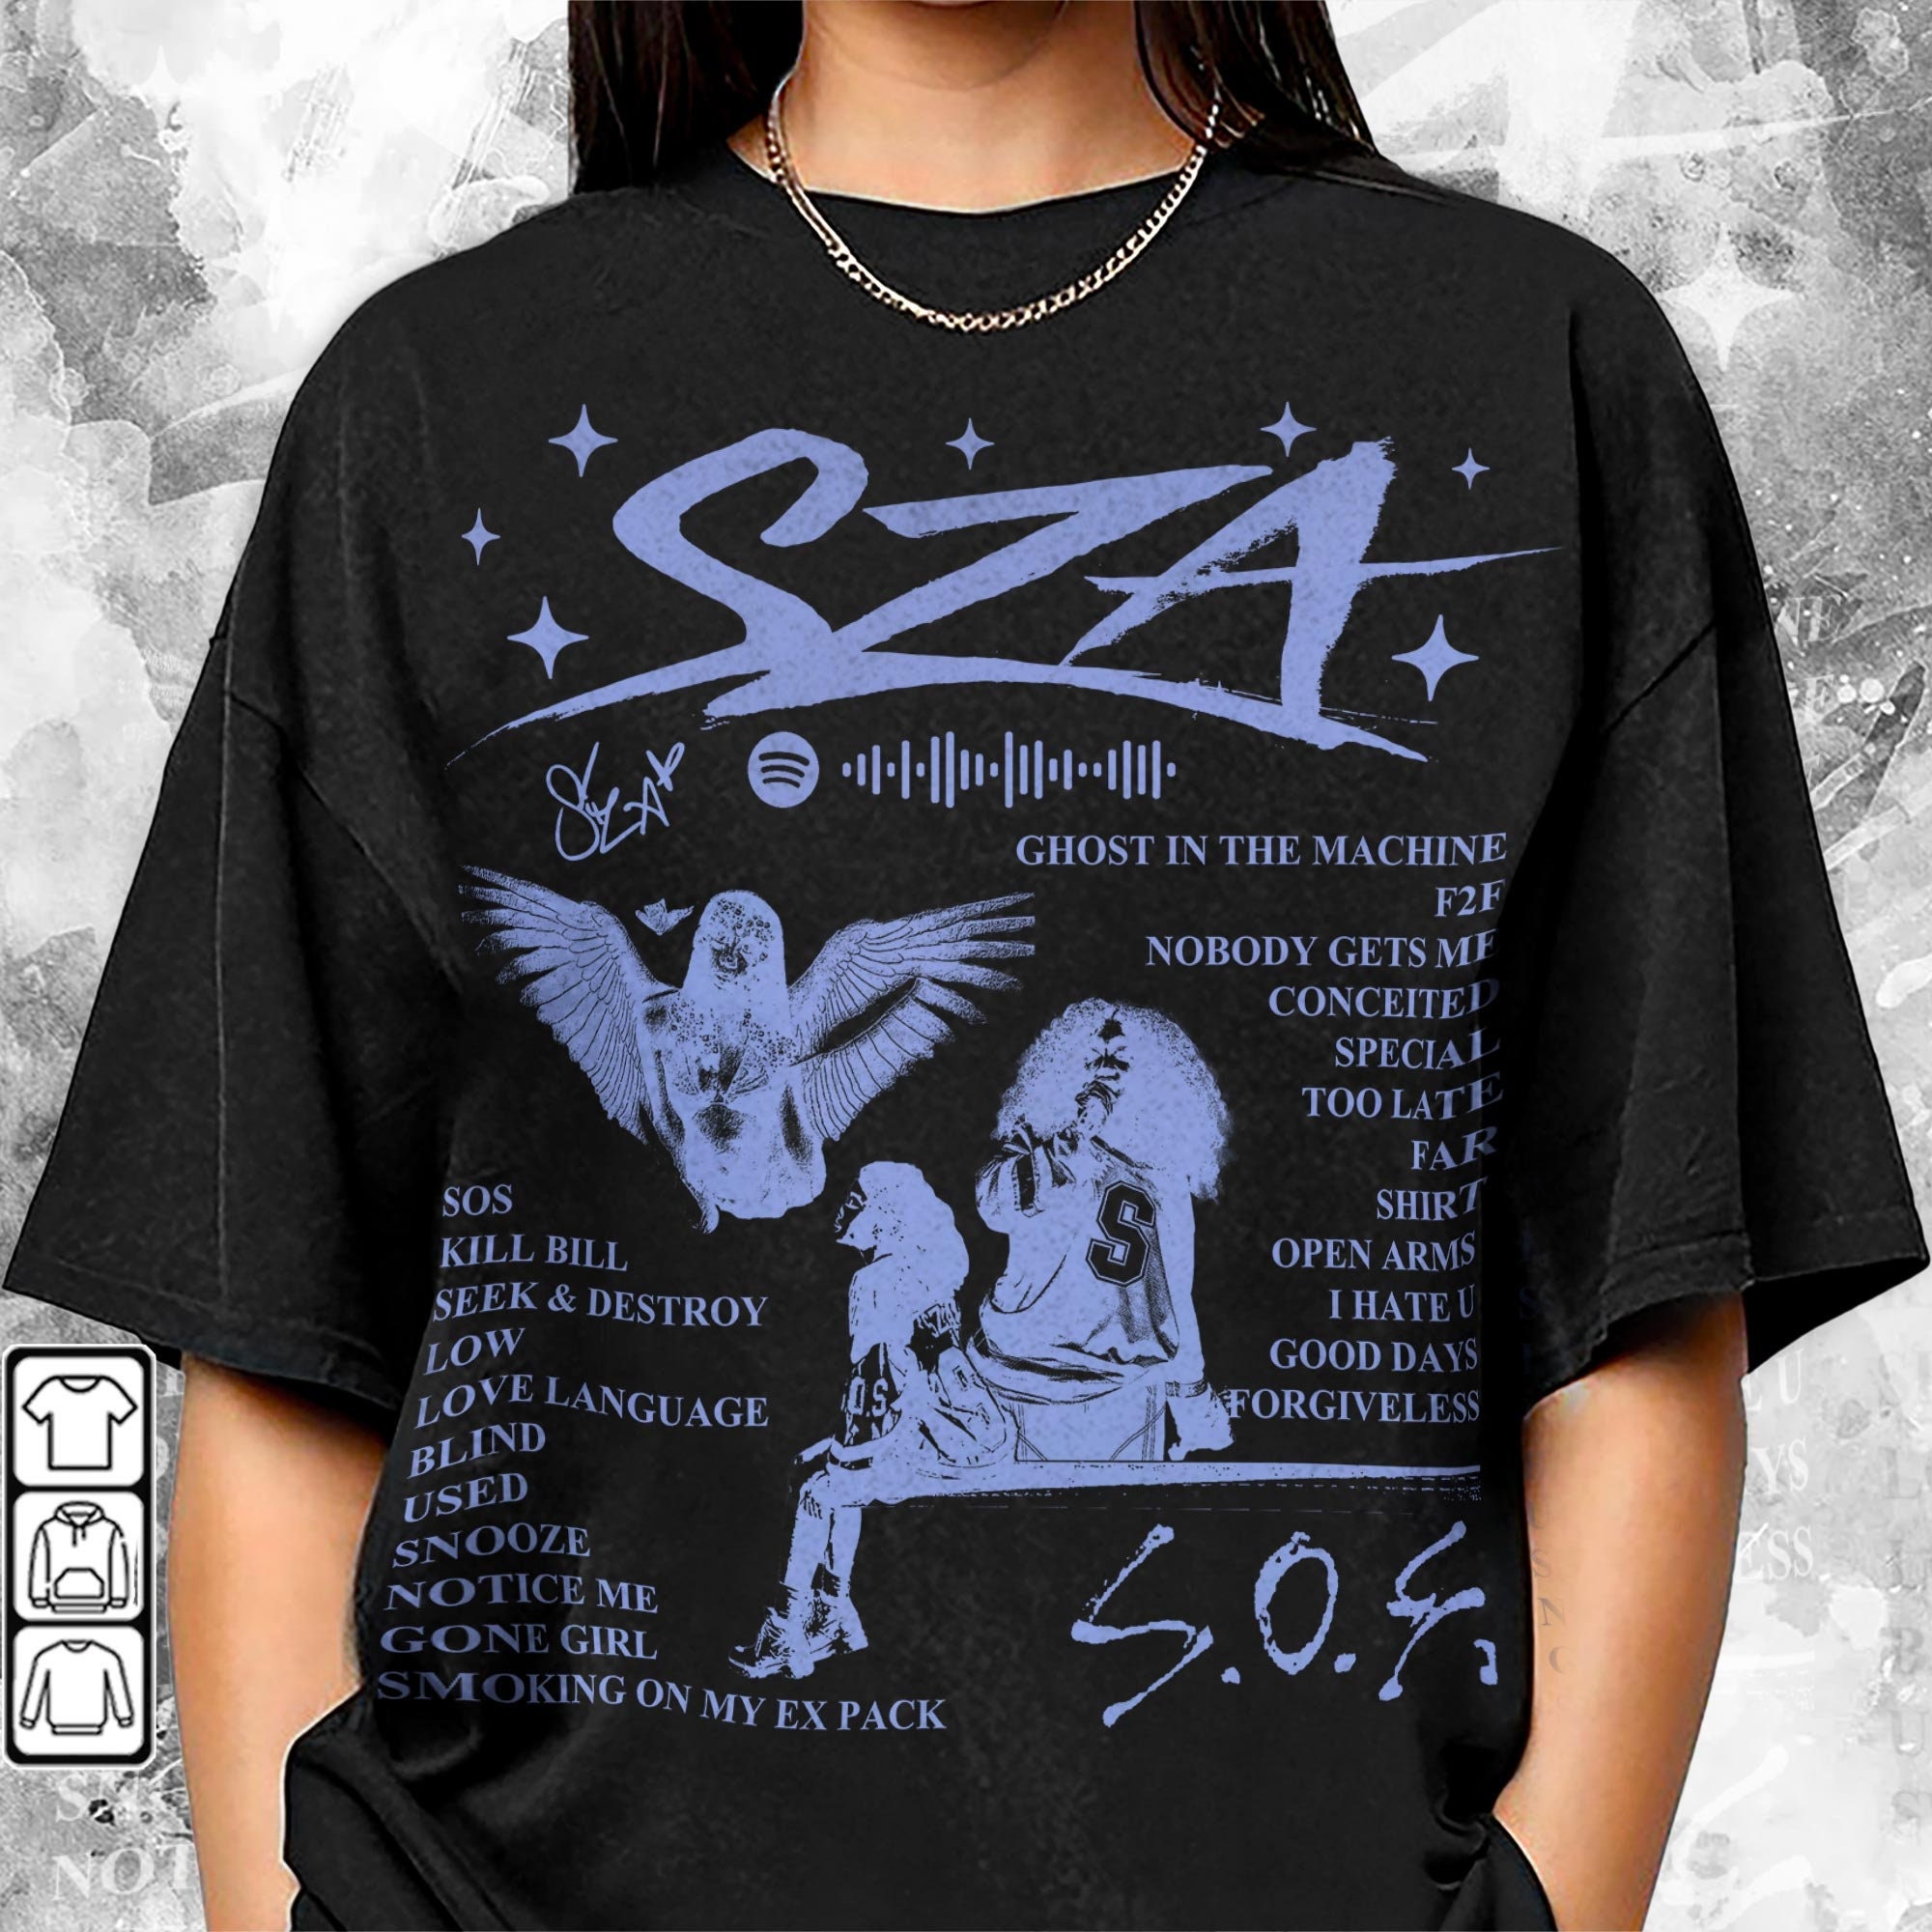 Sza Good Days SOS Album 90s Rap Music Shirt, Bootleg Rapper Album Vintage Y2K Shirt